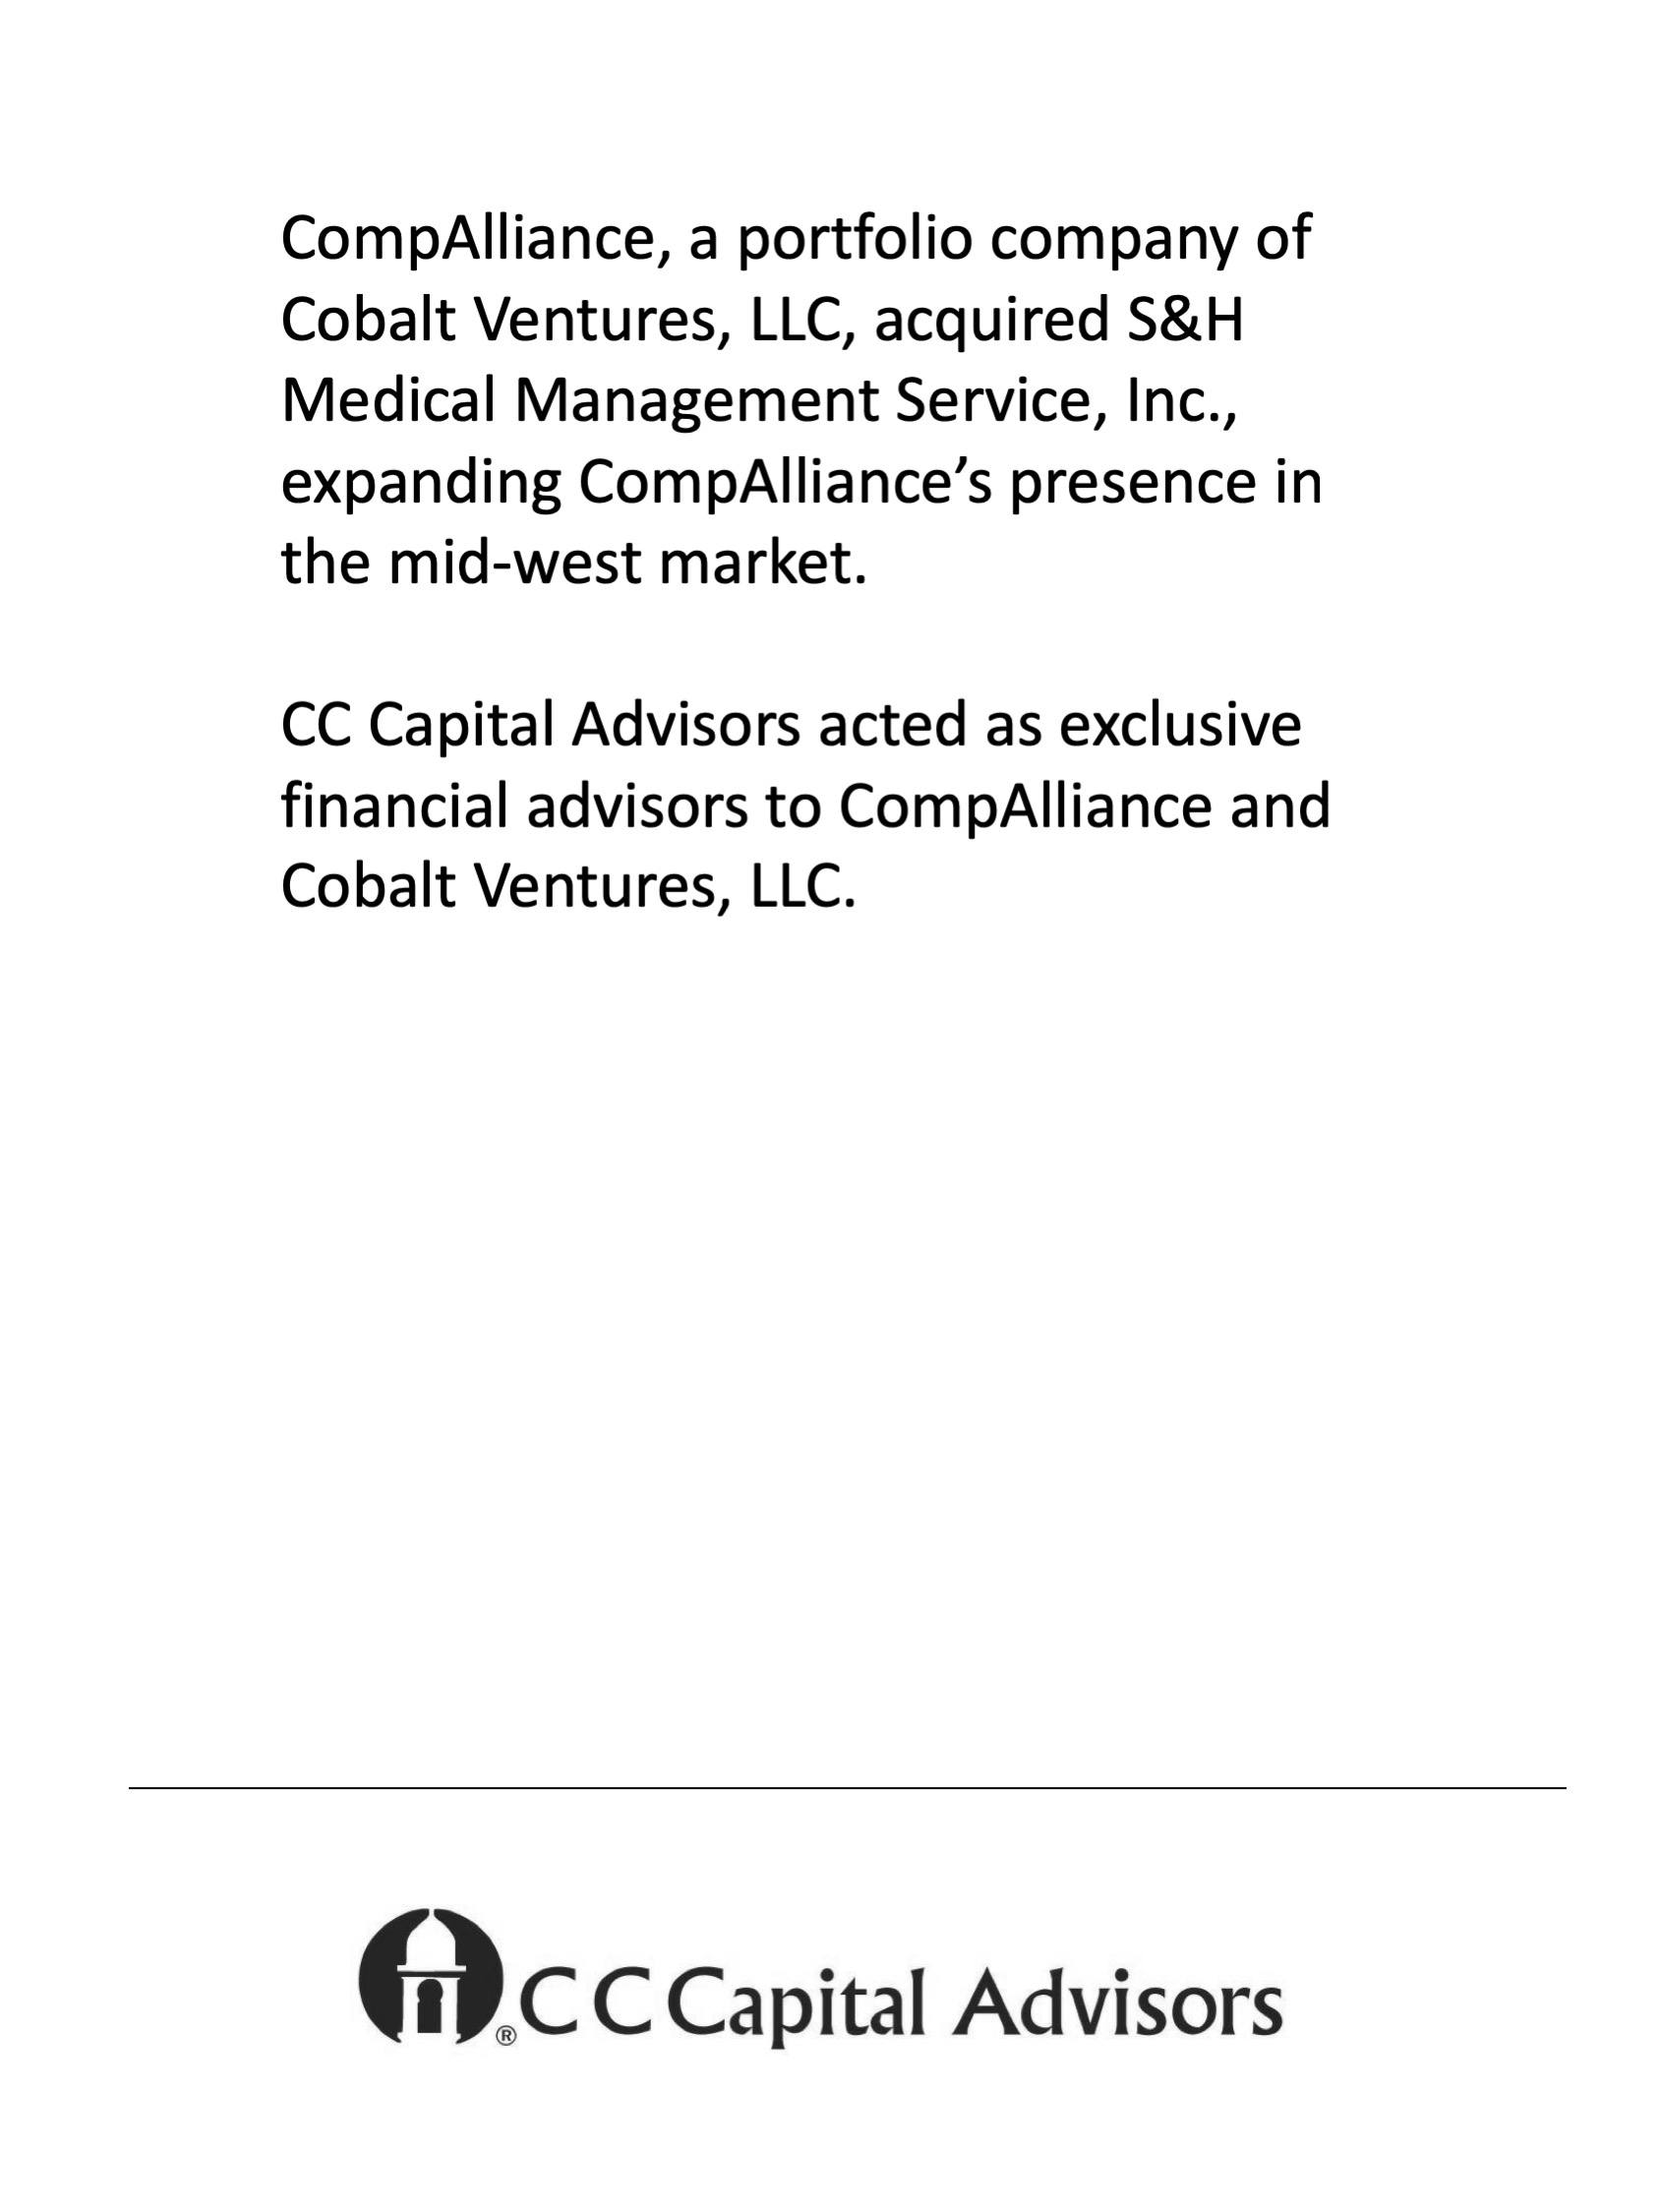 Colbalt Ventures - S&H transaction